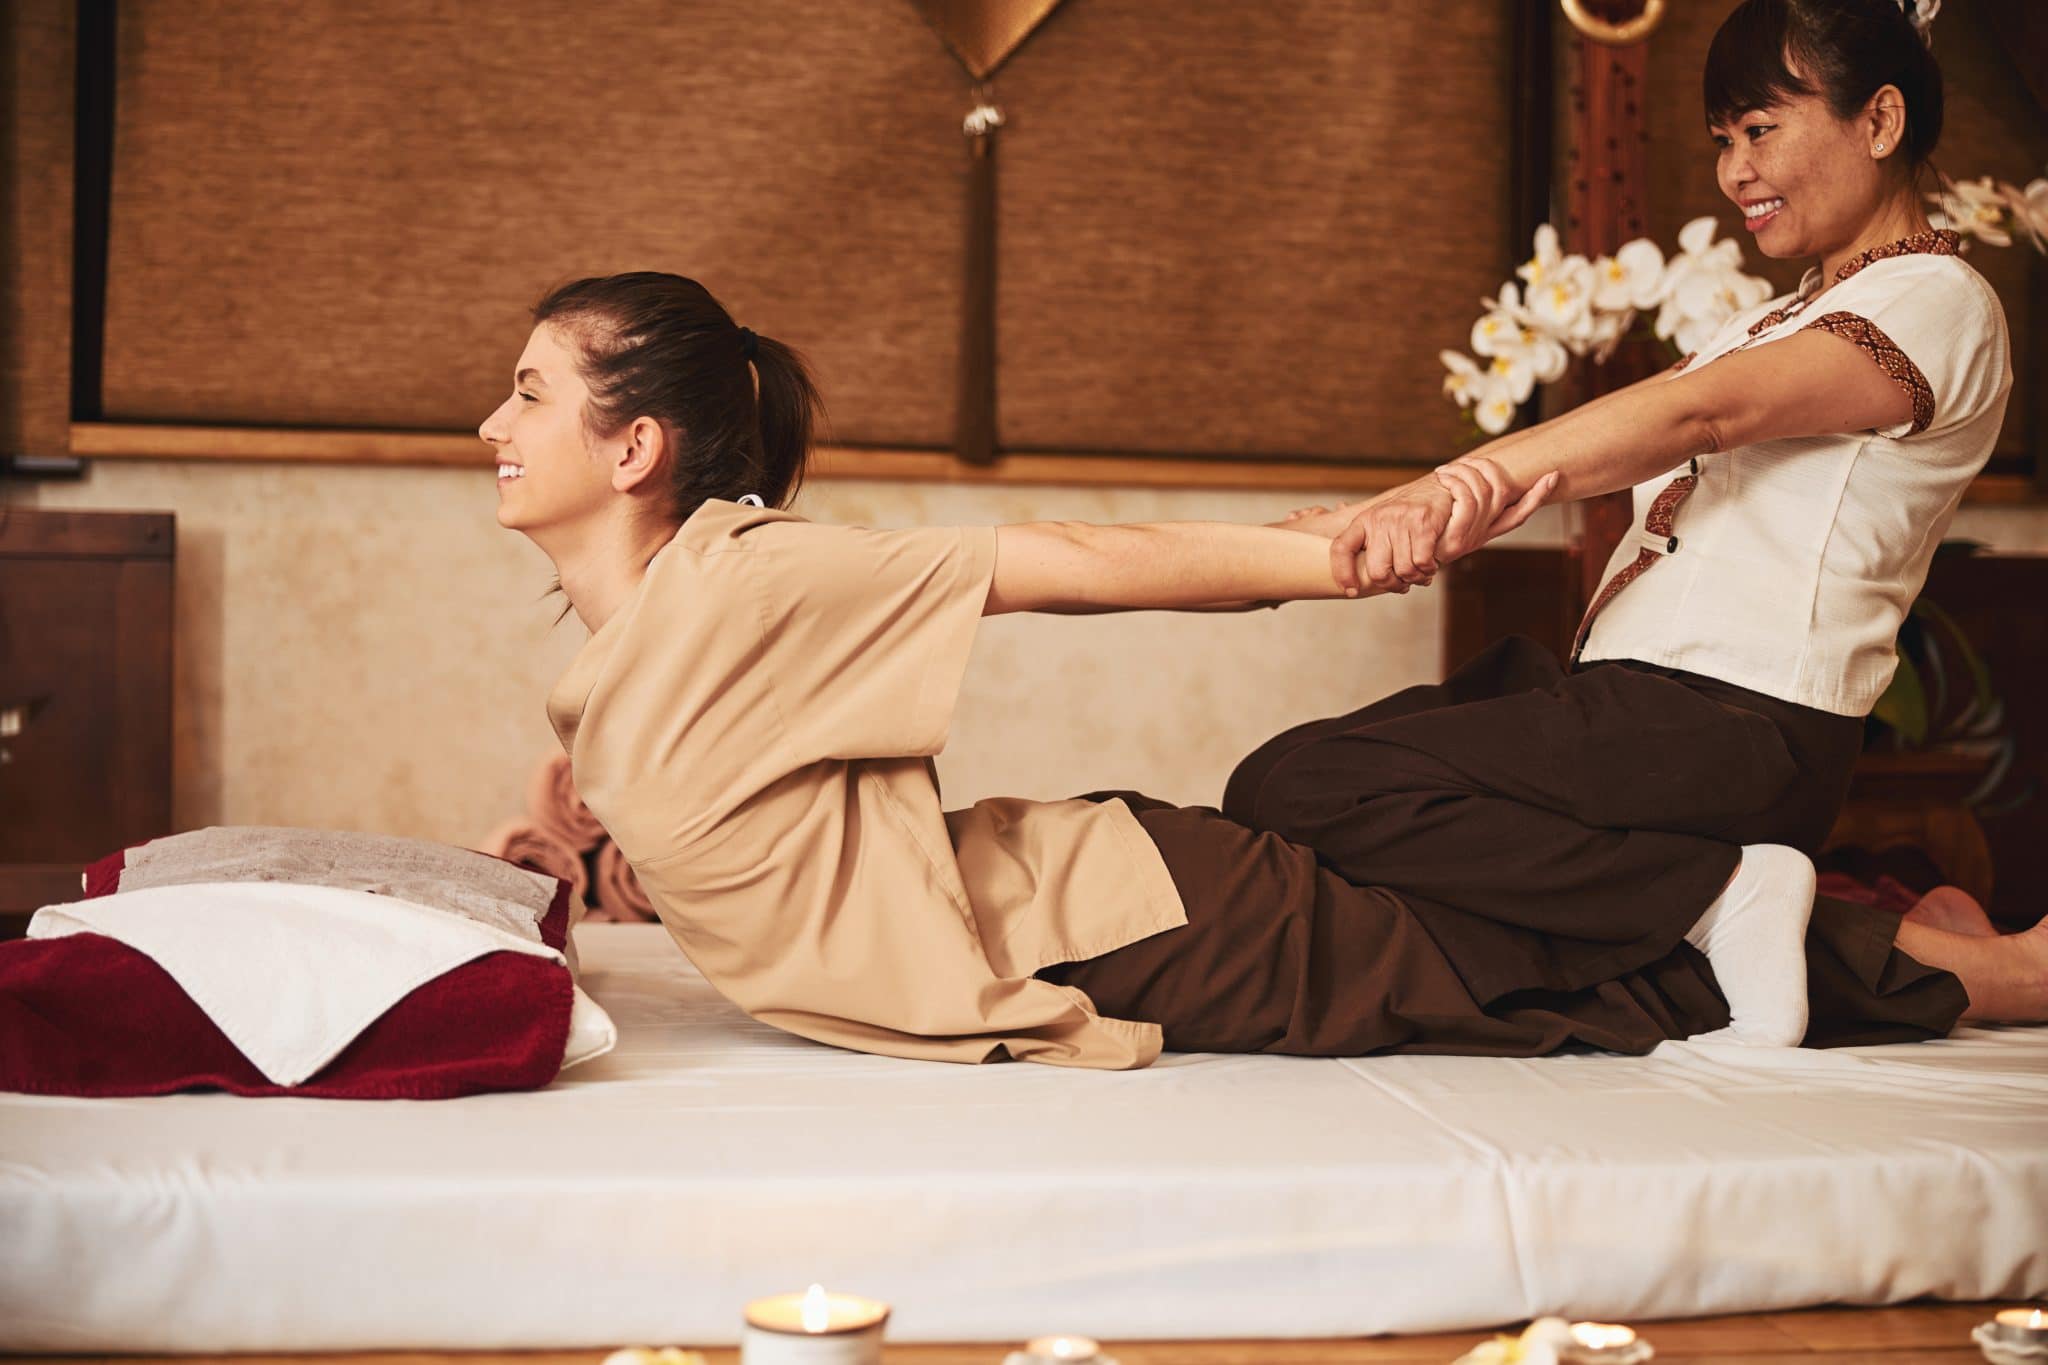 Massage Thaï Toulouse Aromdee Salon Massage Thaïlandais